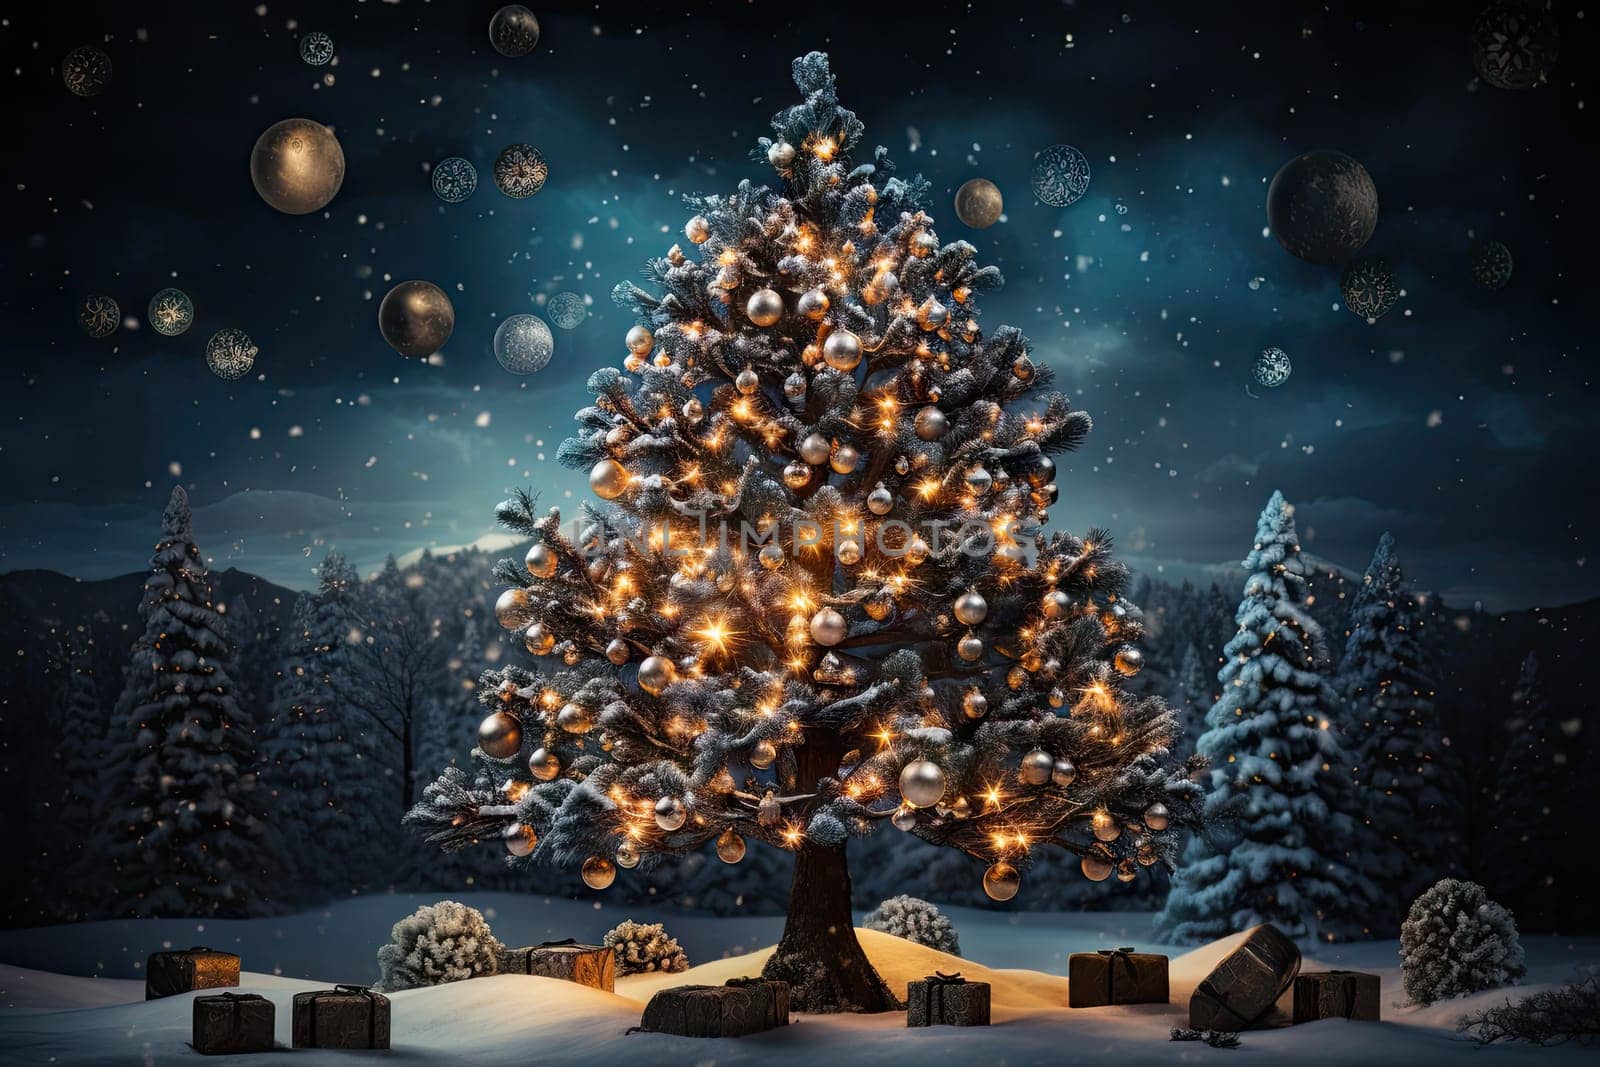 A Glowing Christmas Tree Illuminating a Serene Winter Wonderland